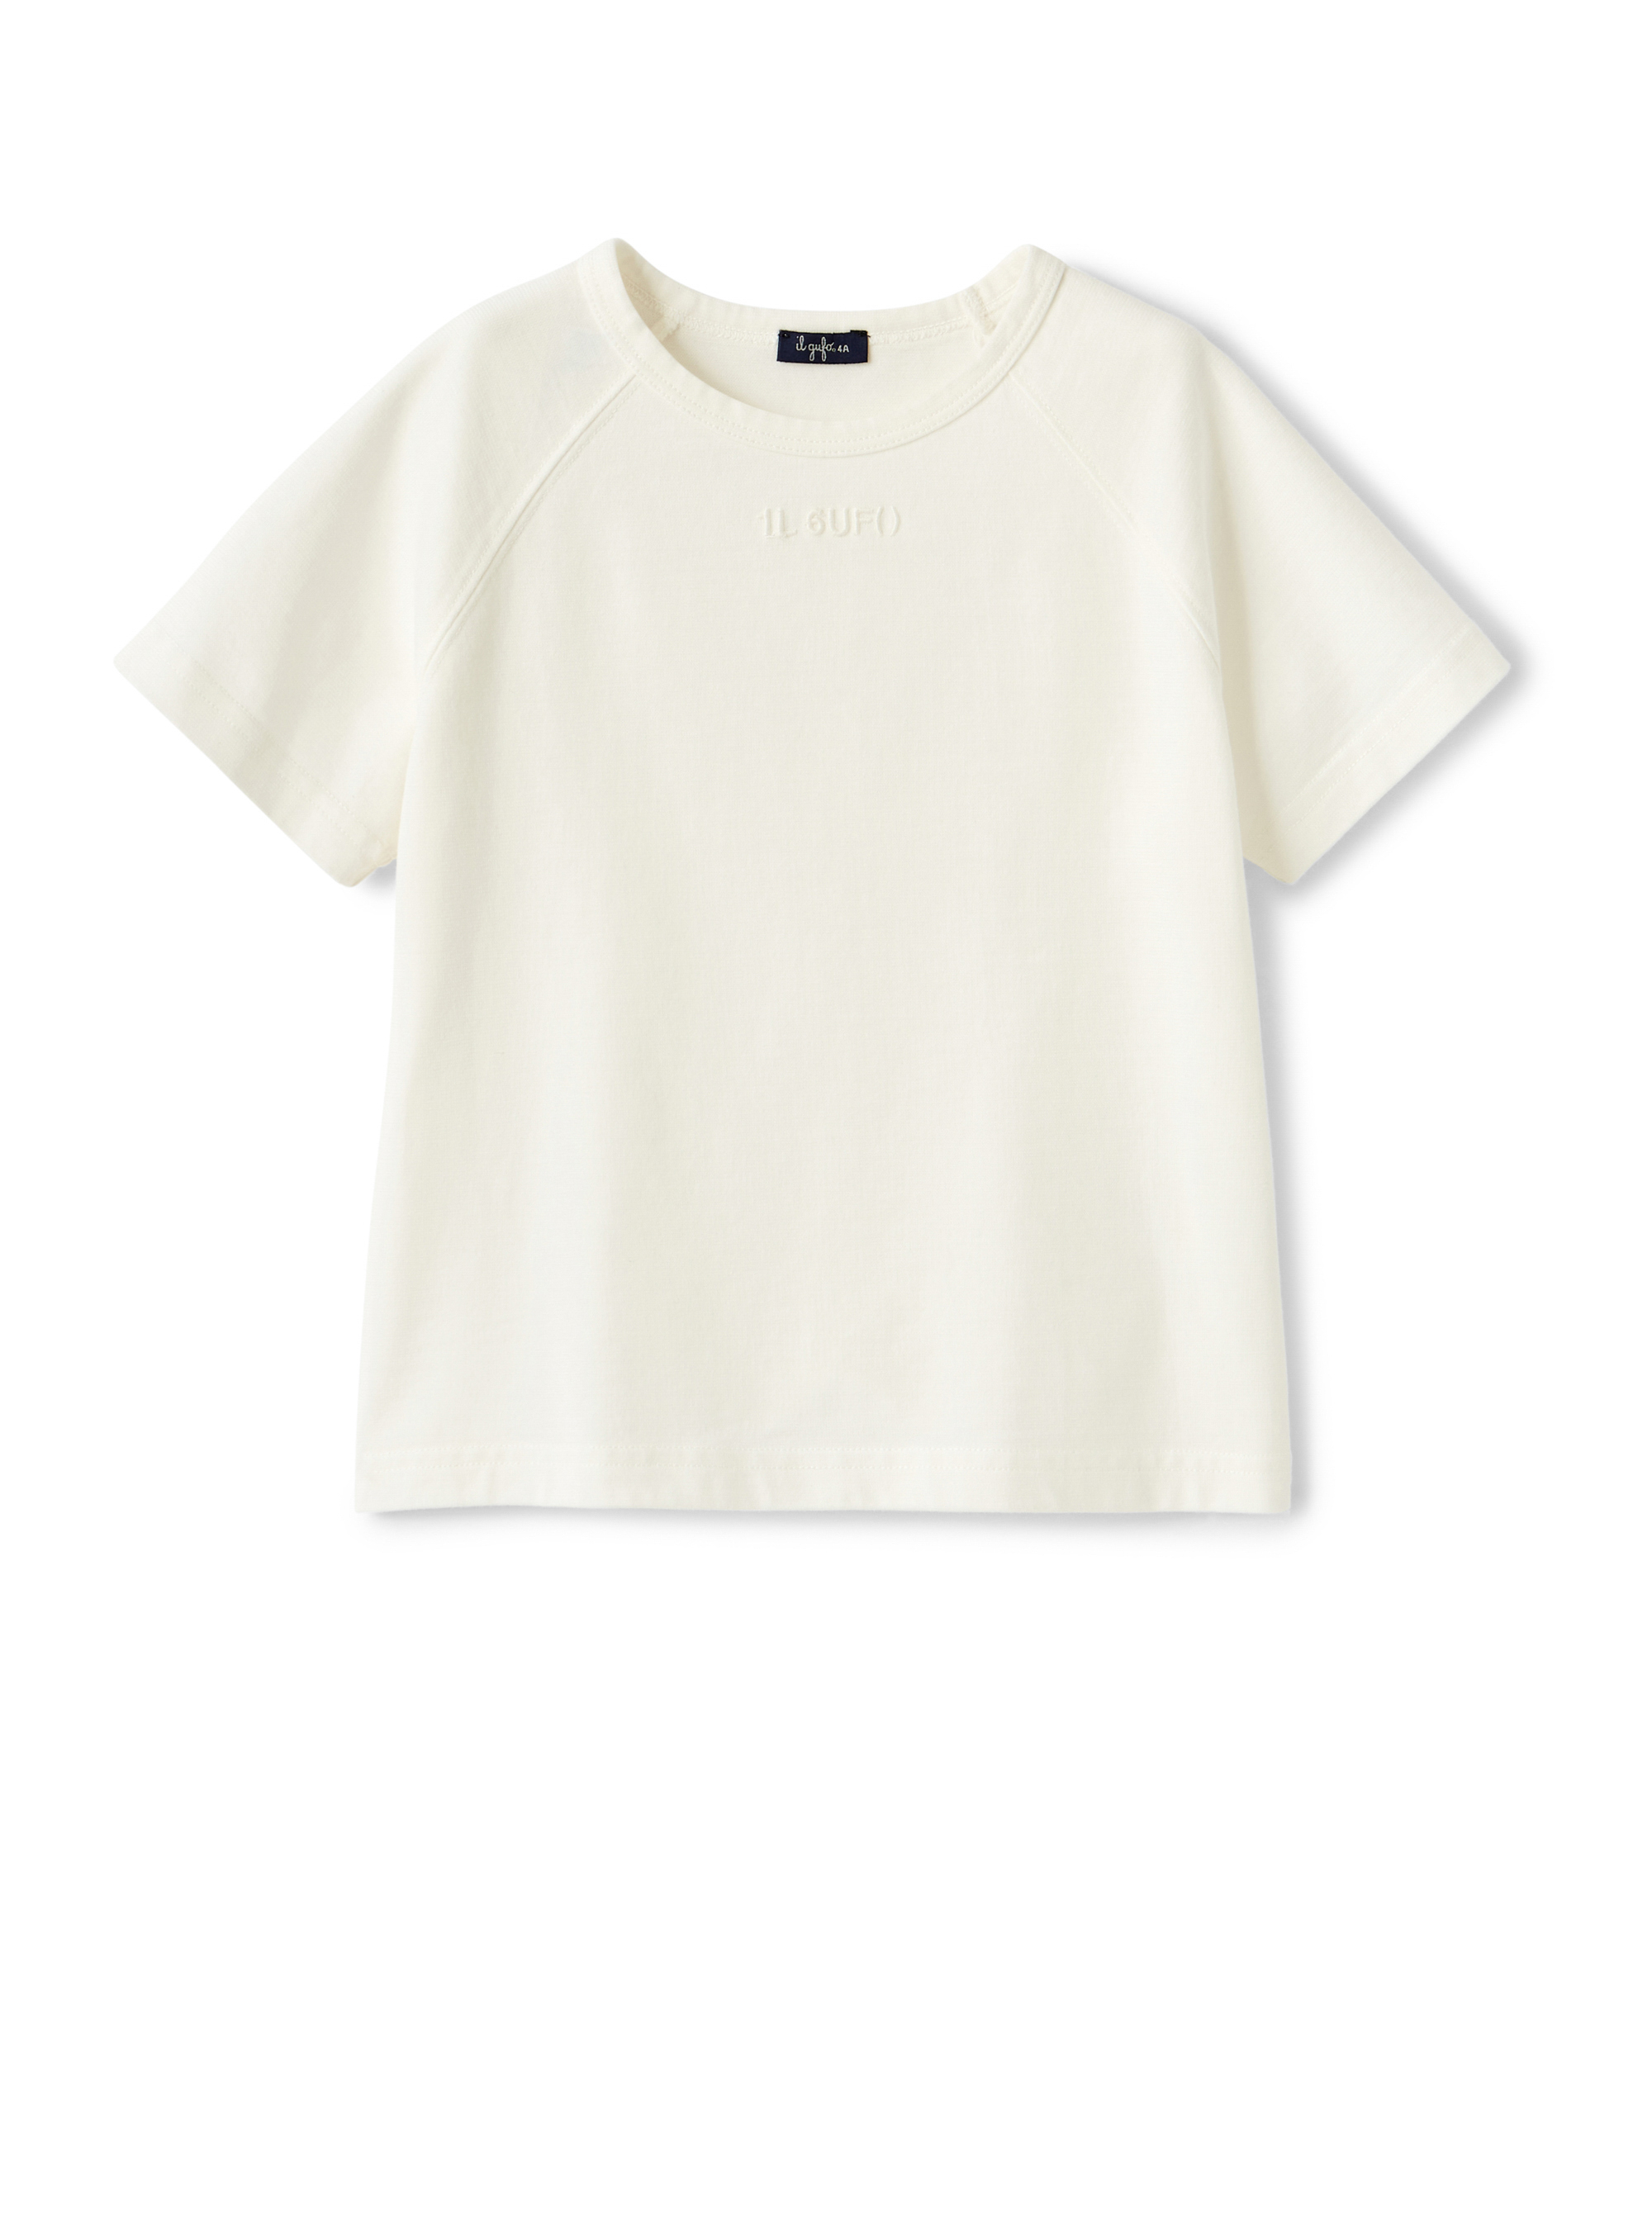 Heavy jersey white t-shirt - White | Il Gufo